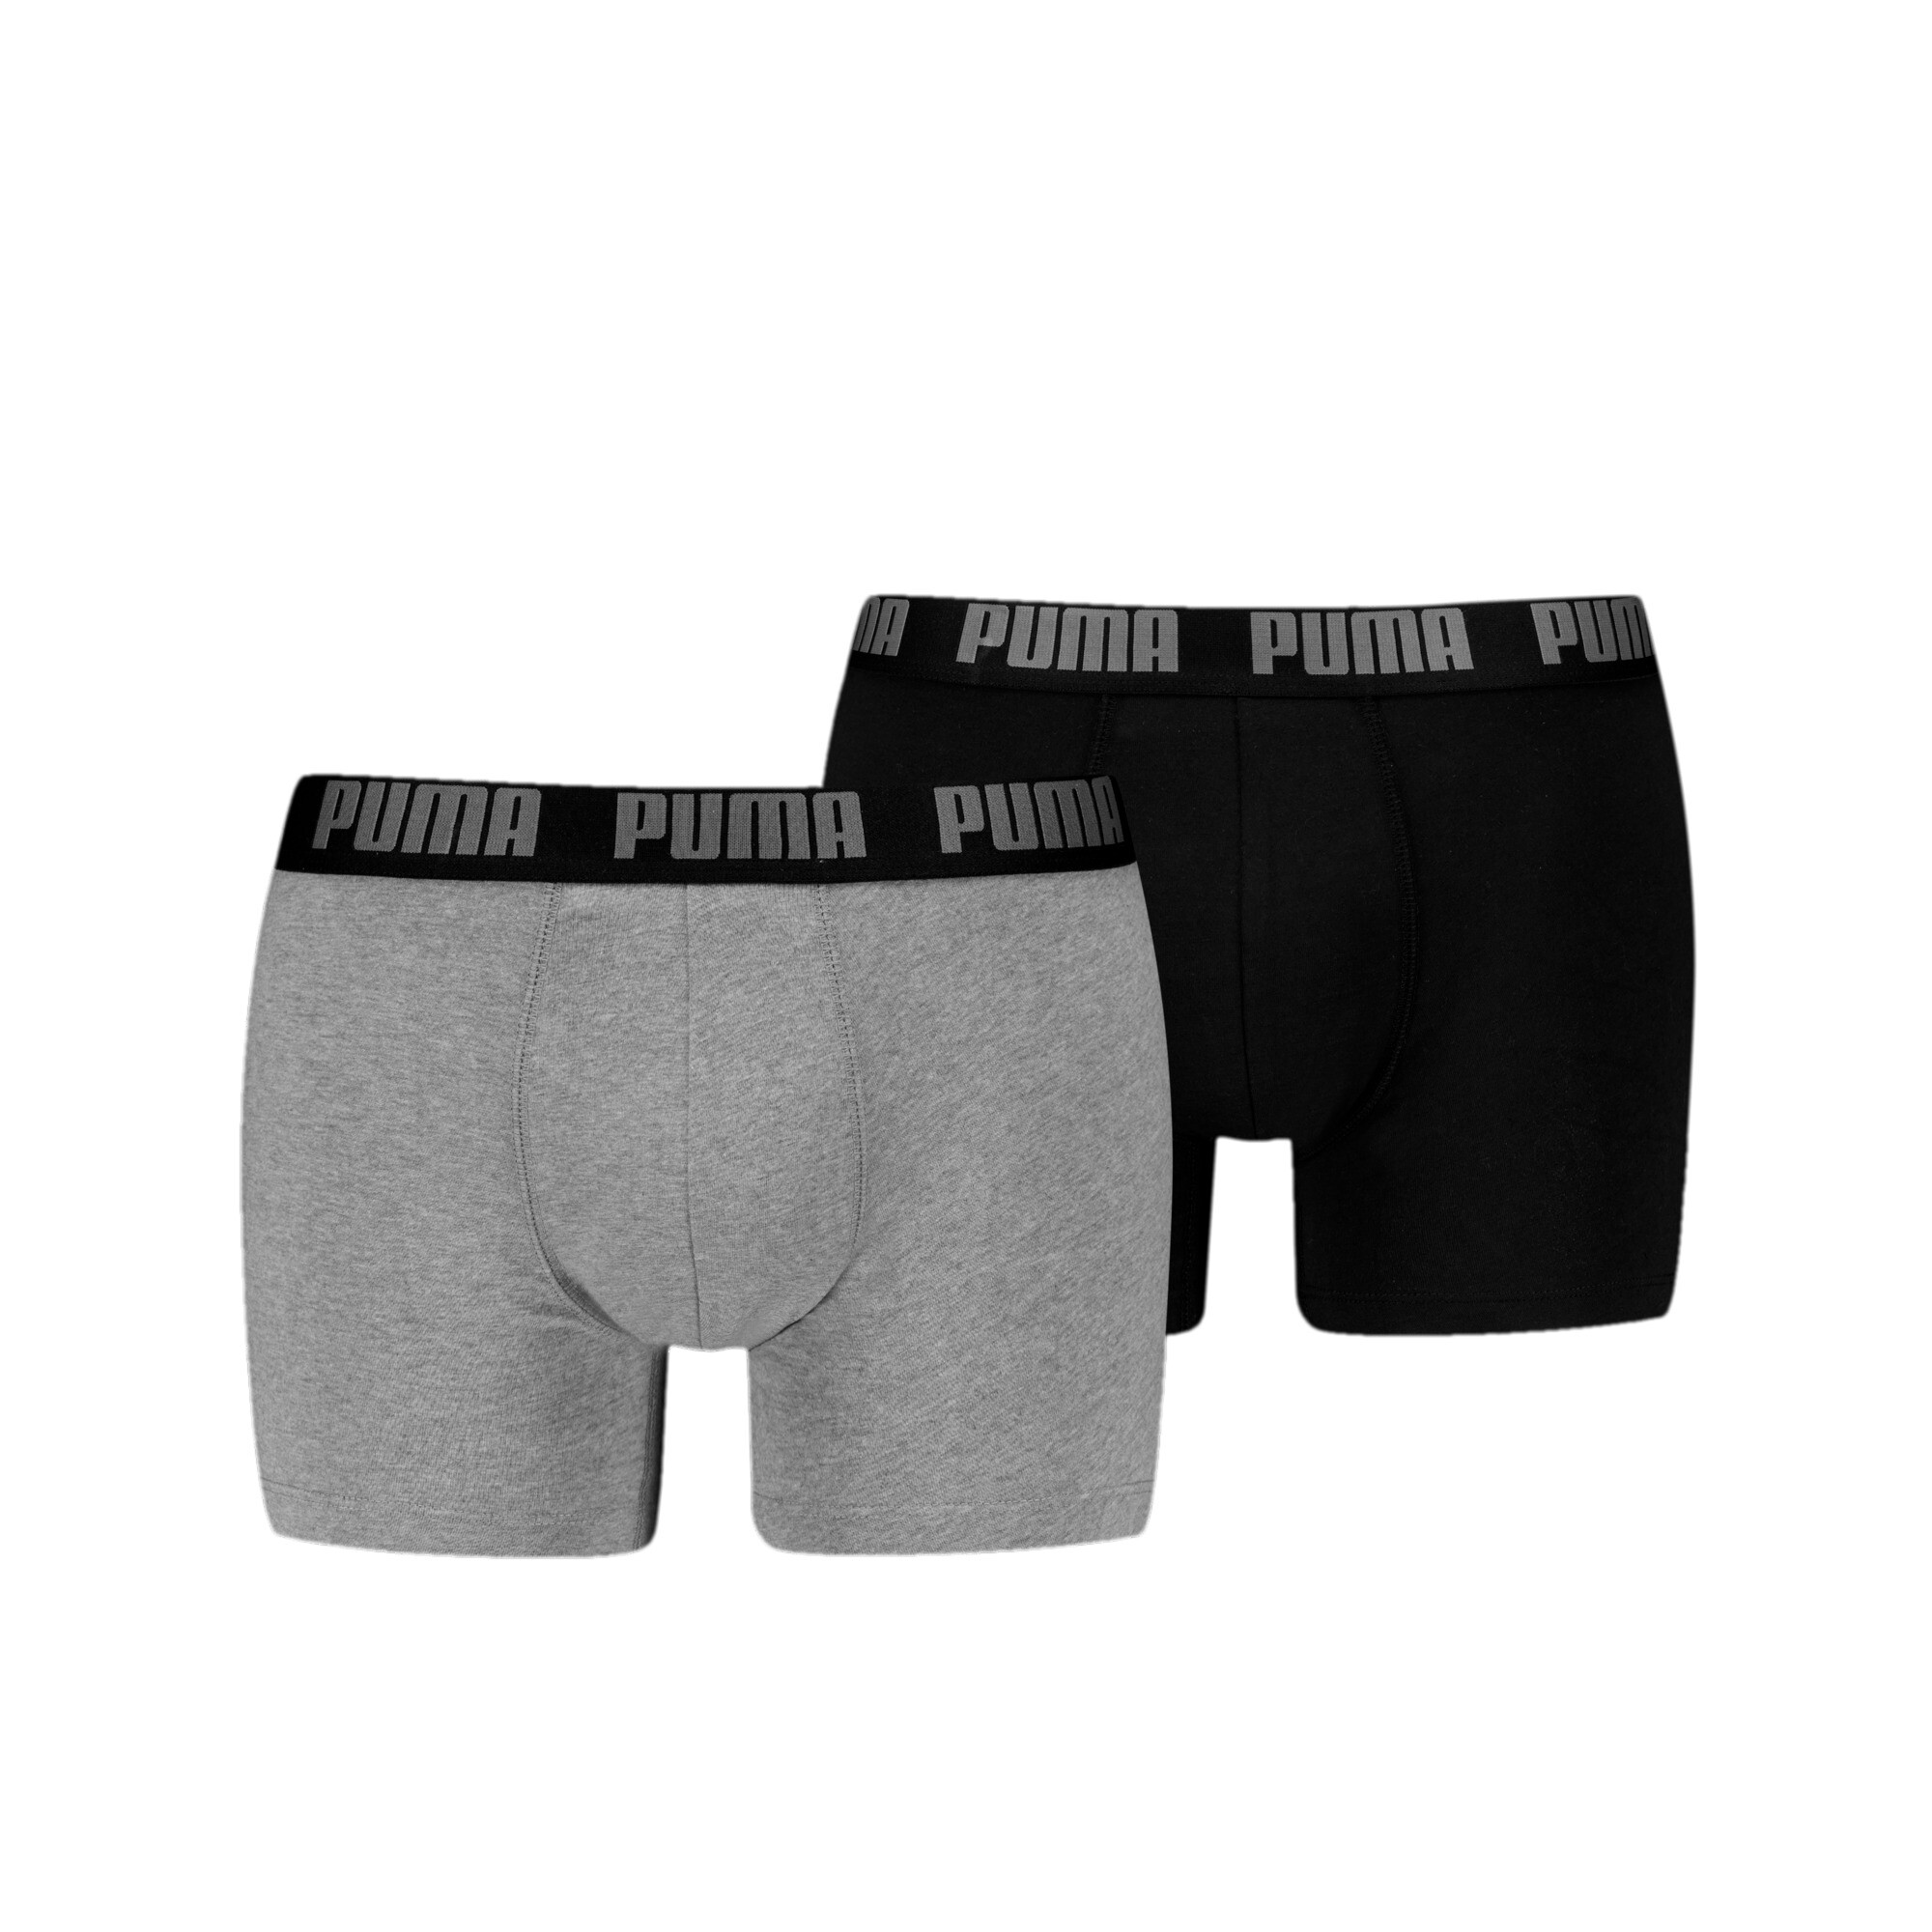 Men's Puma's Boxer Briefs 2 Pack, Gray, Size 5, Clothing